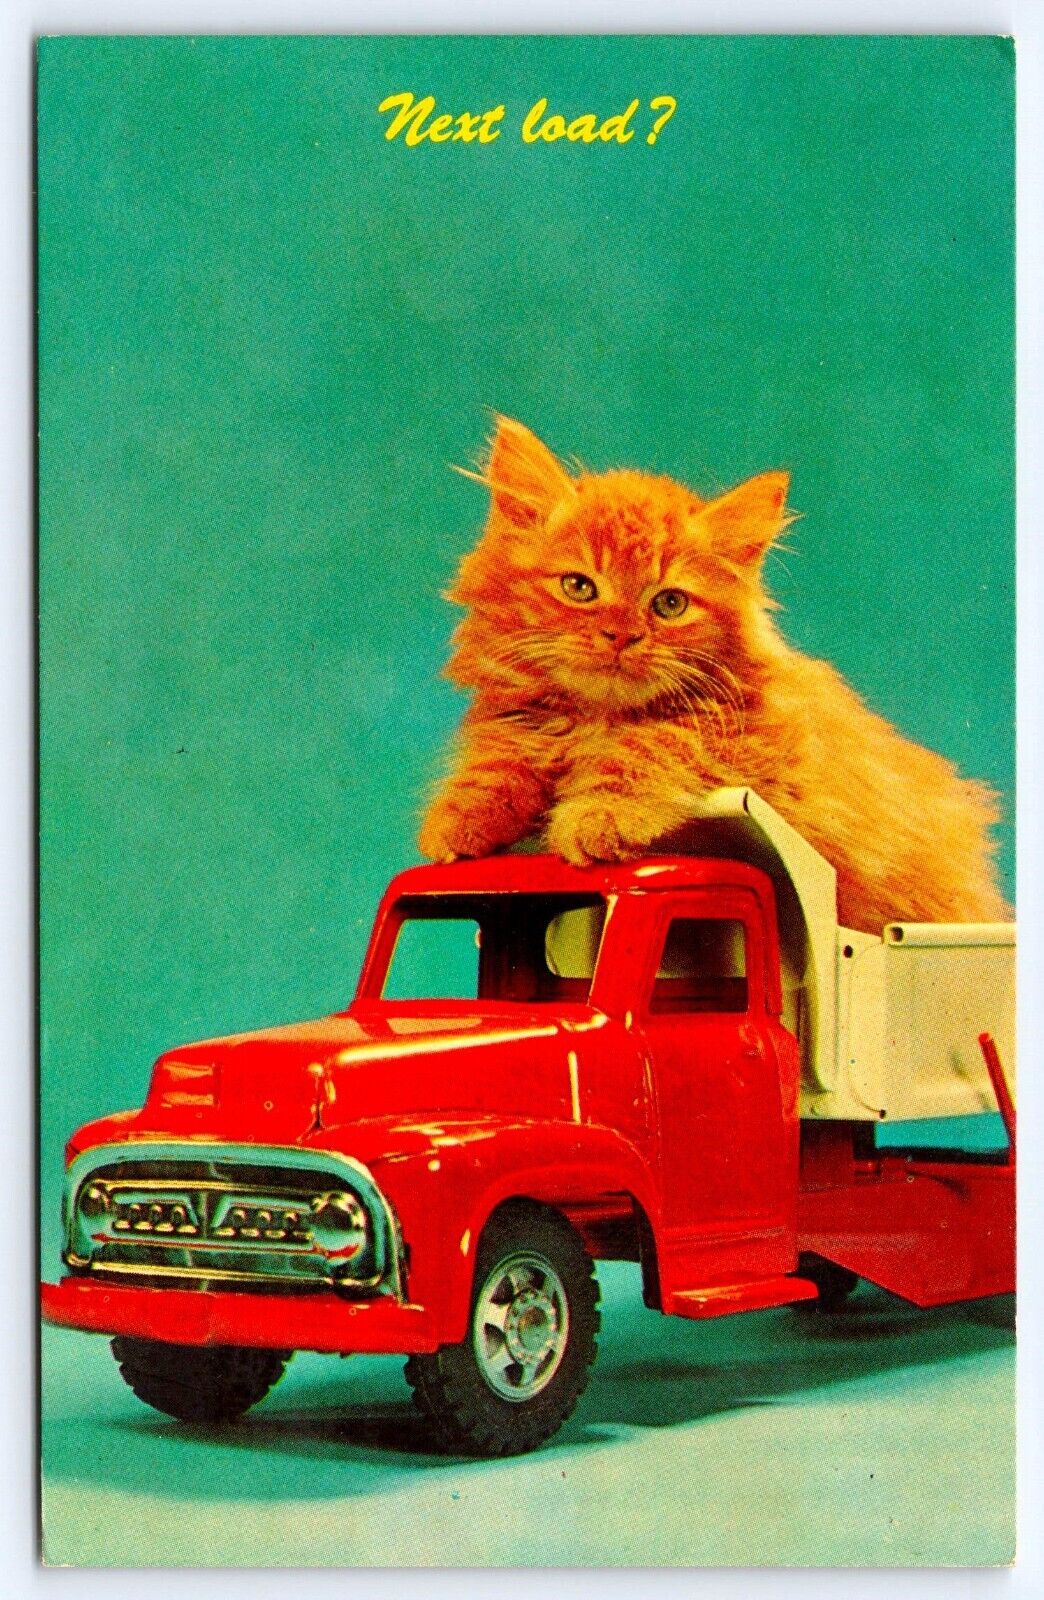 North Kingsville Ohio Kitten in Buddy L Toy Dump Truck Next Load? OH Postcard